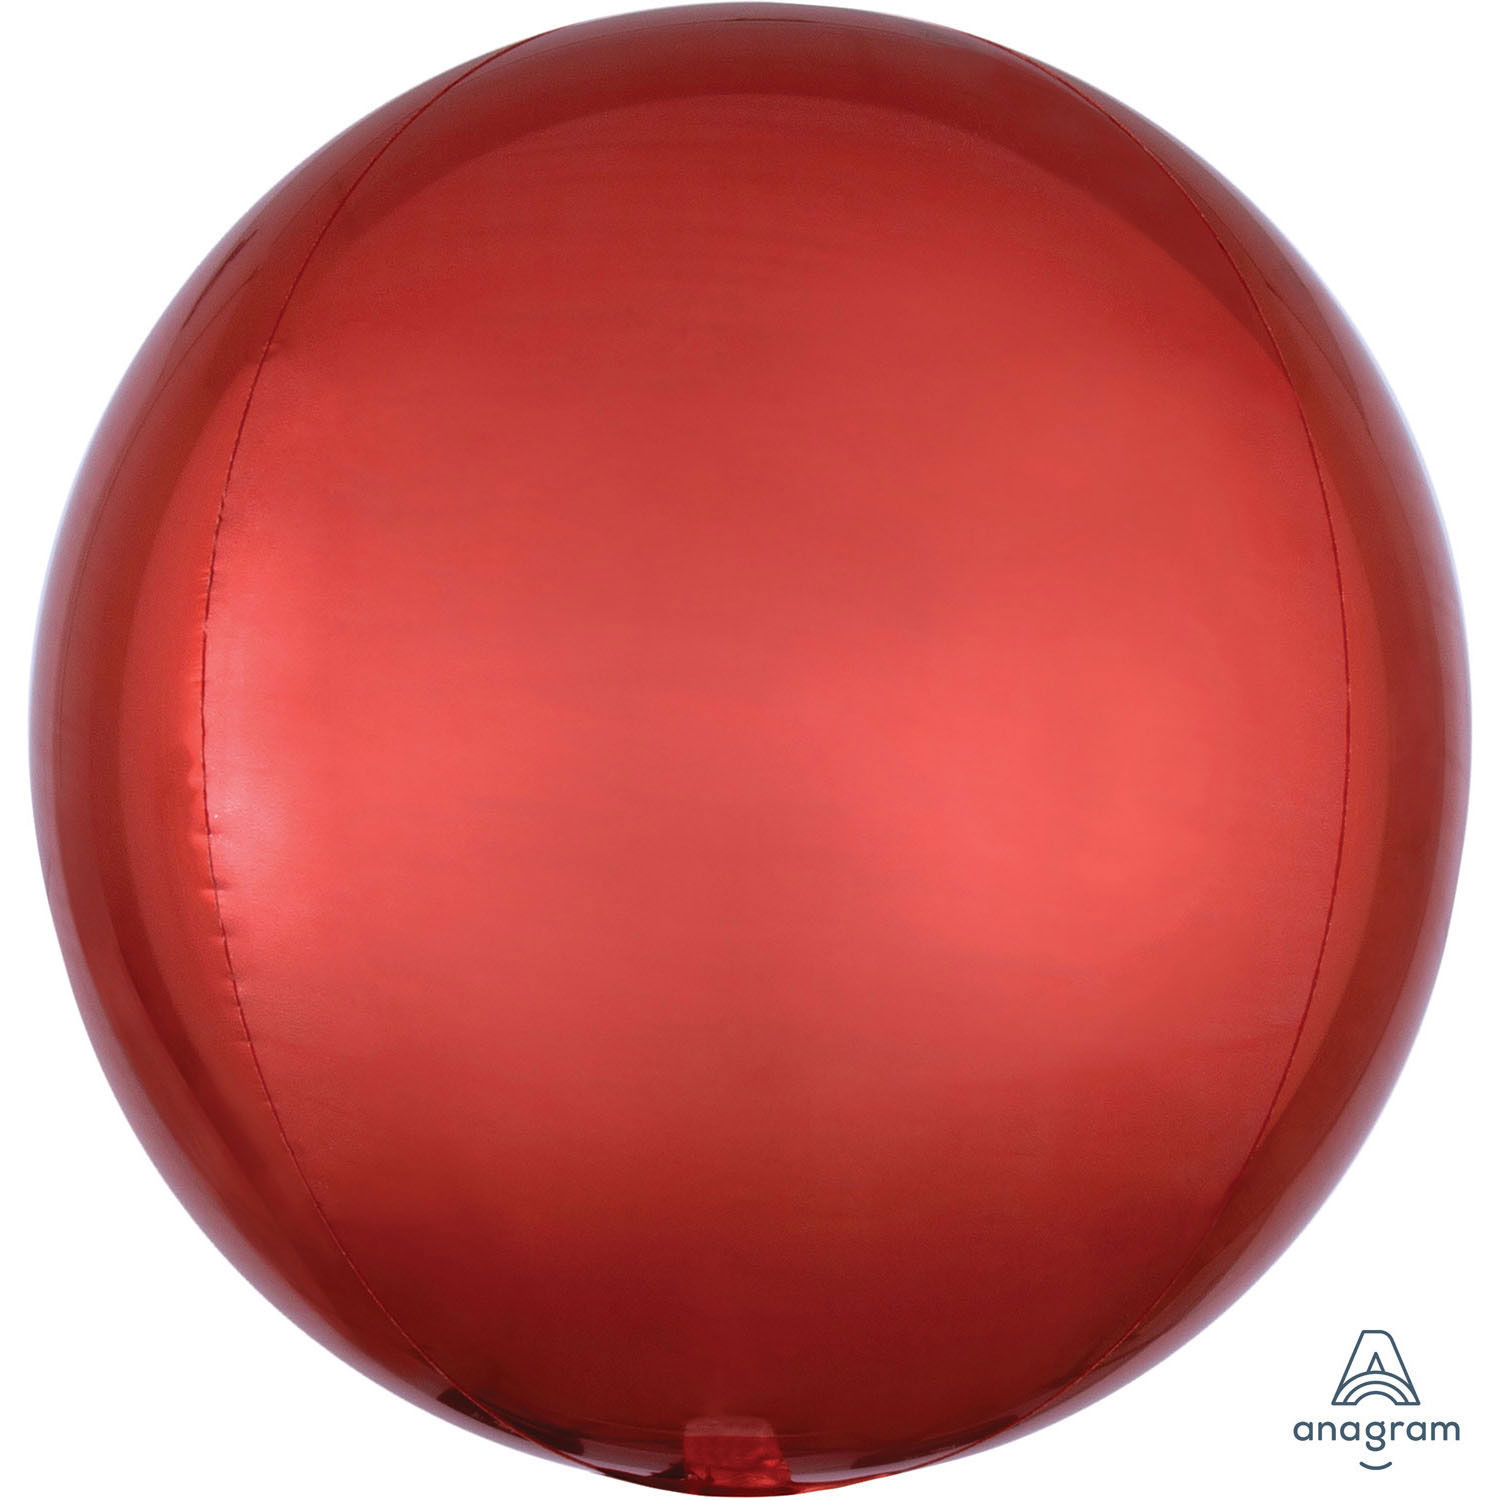 SALE Folienballon Orbz Uni, orange, ca. 40 cm - Kugelballon rund